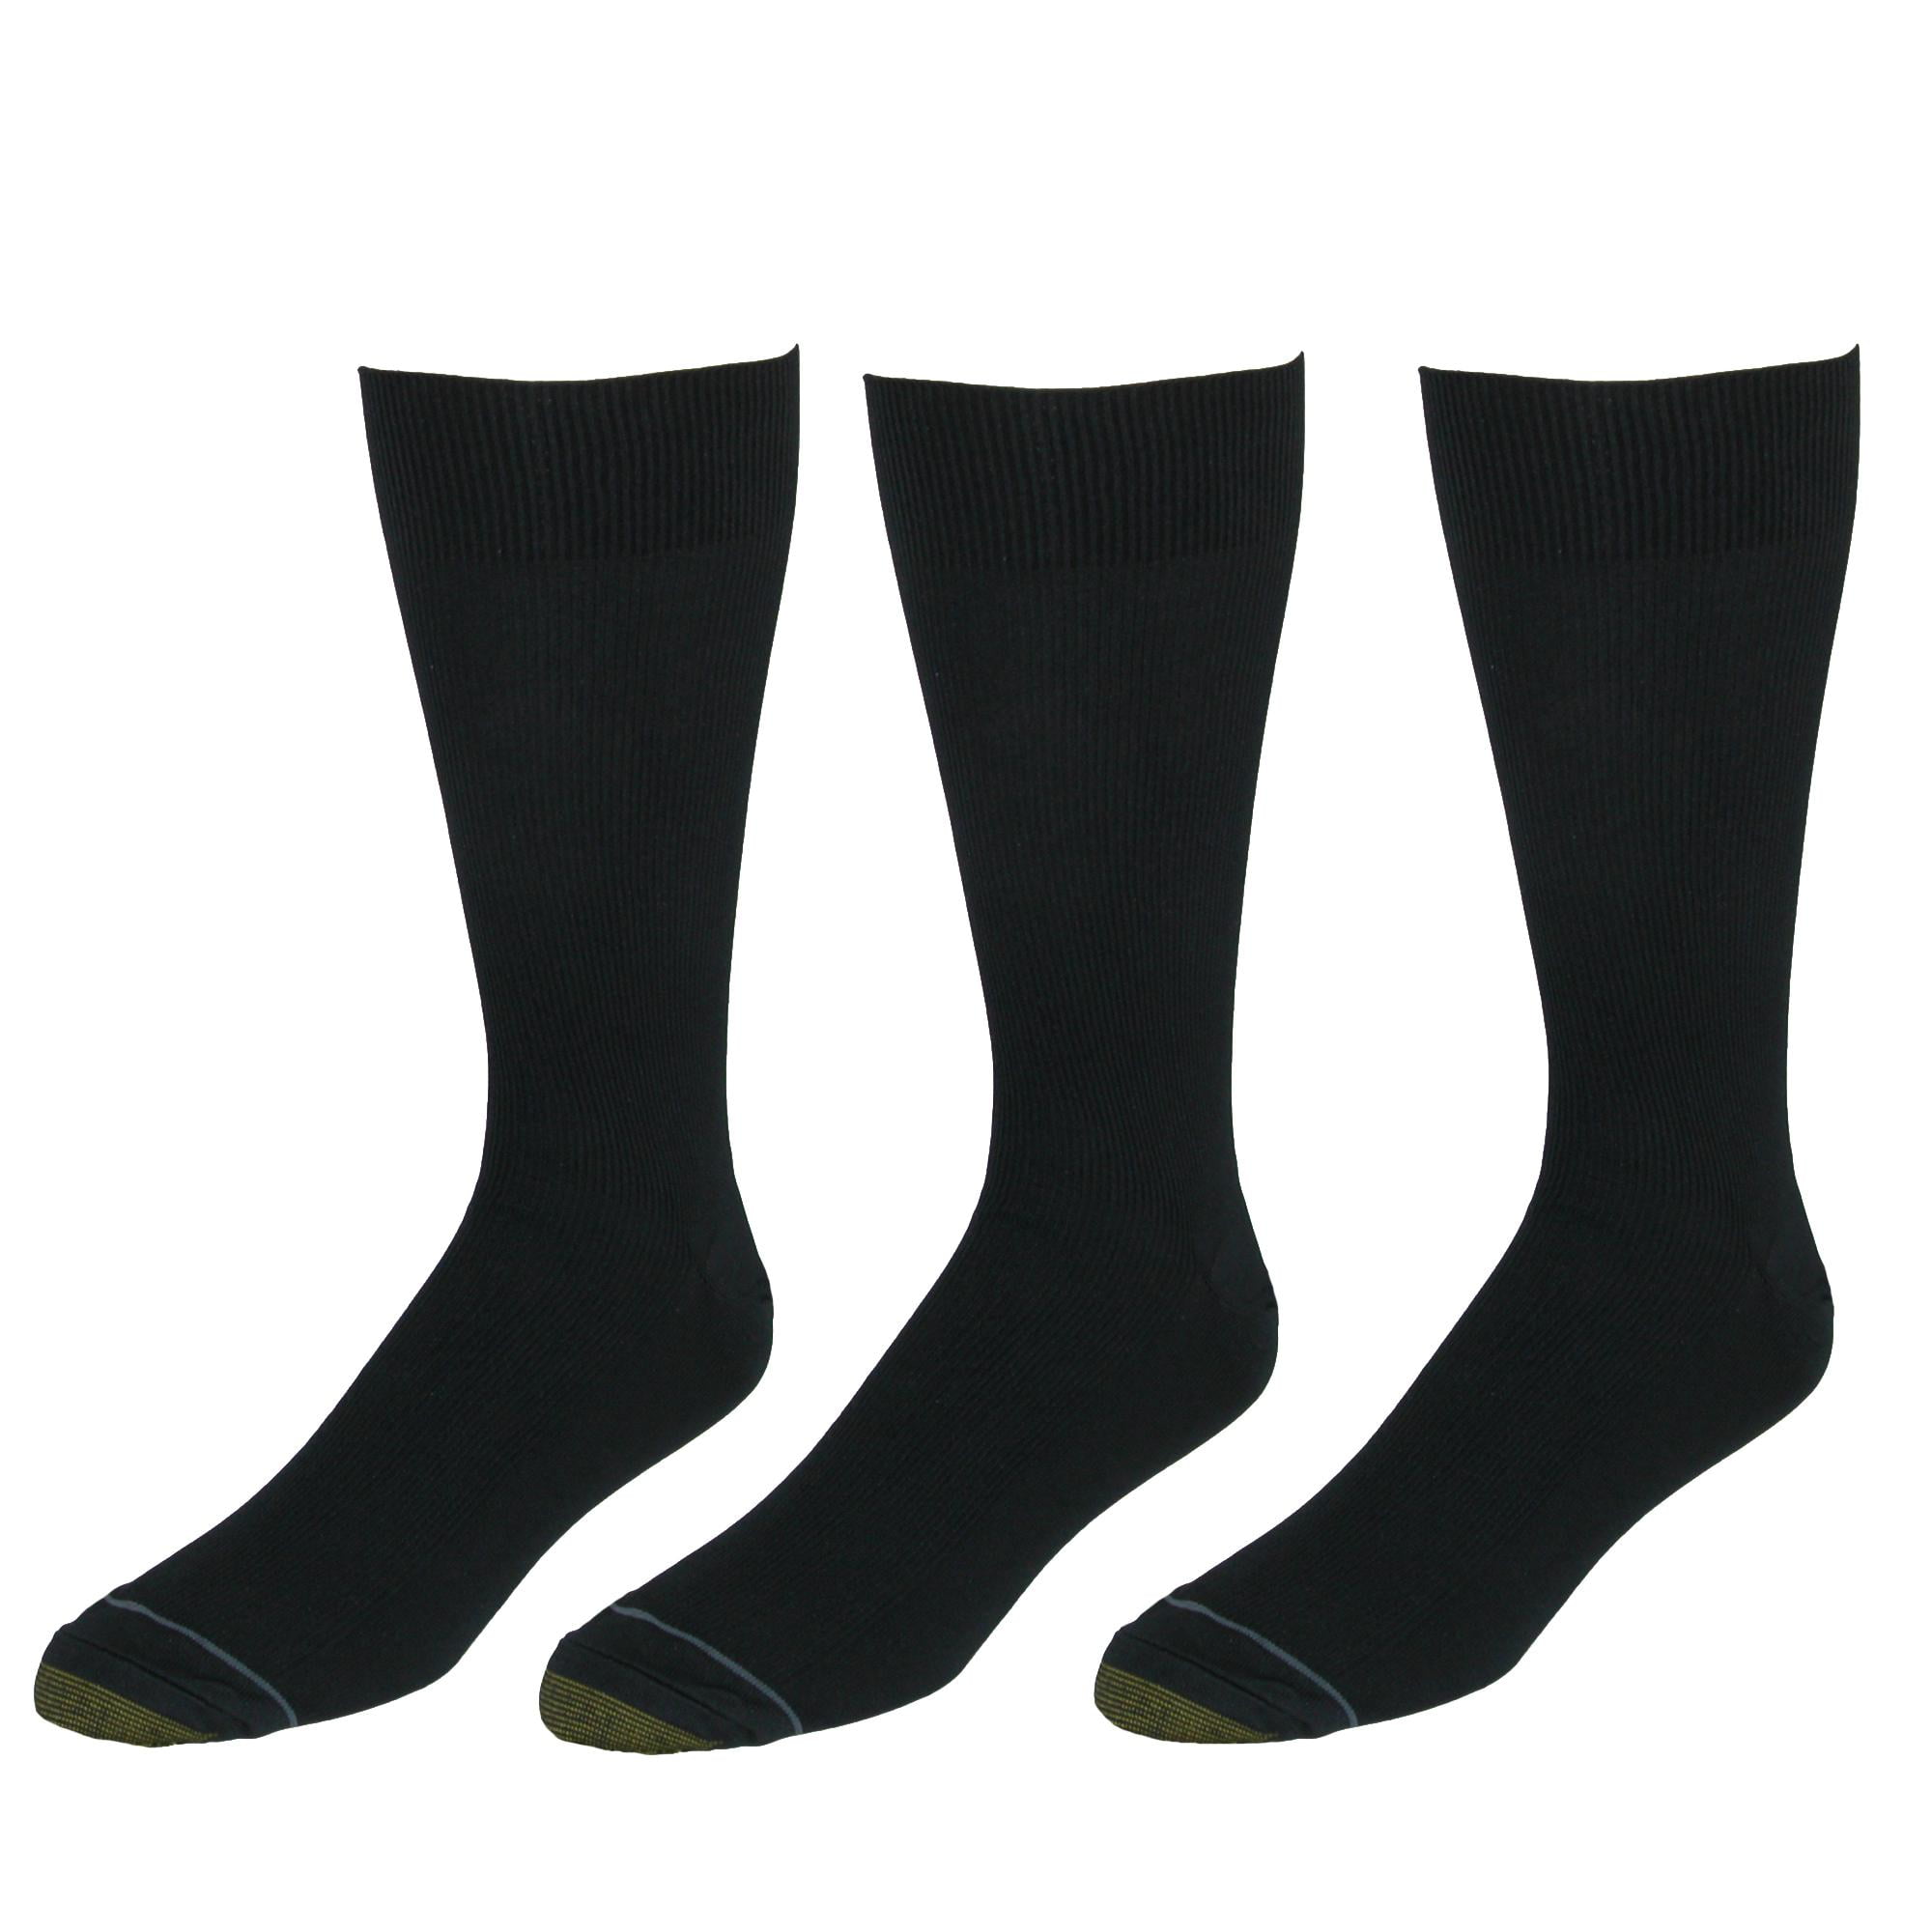 black and gold mens dress socks